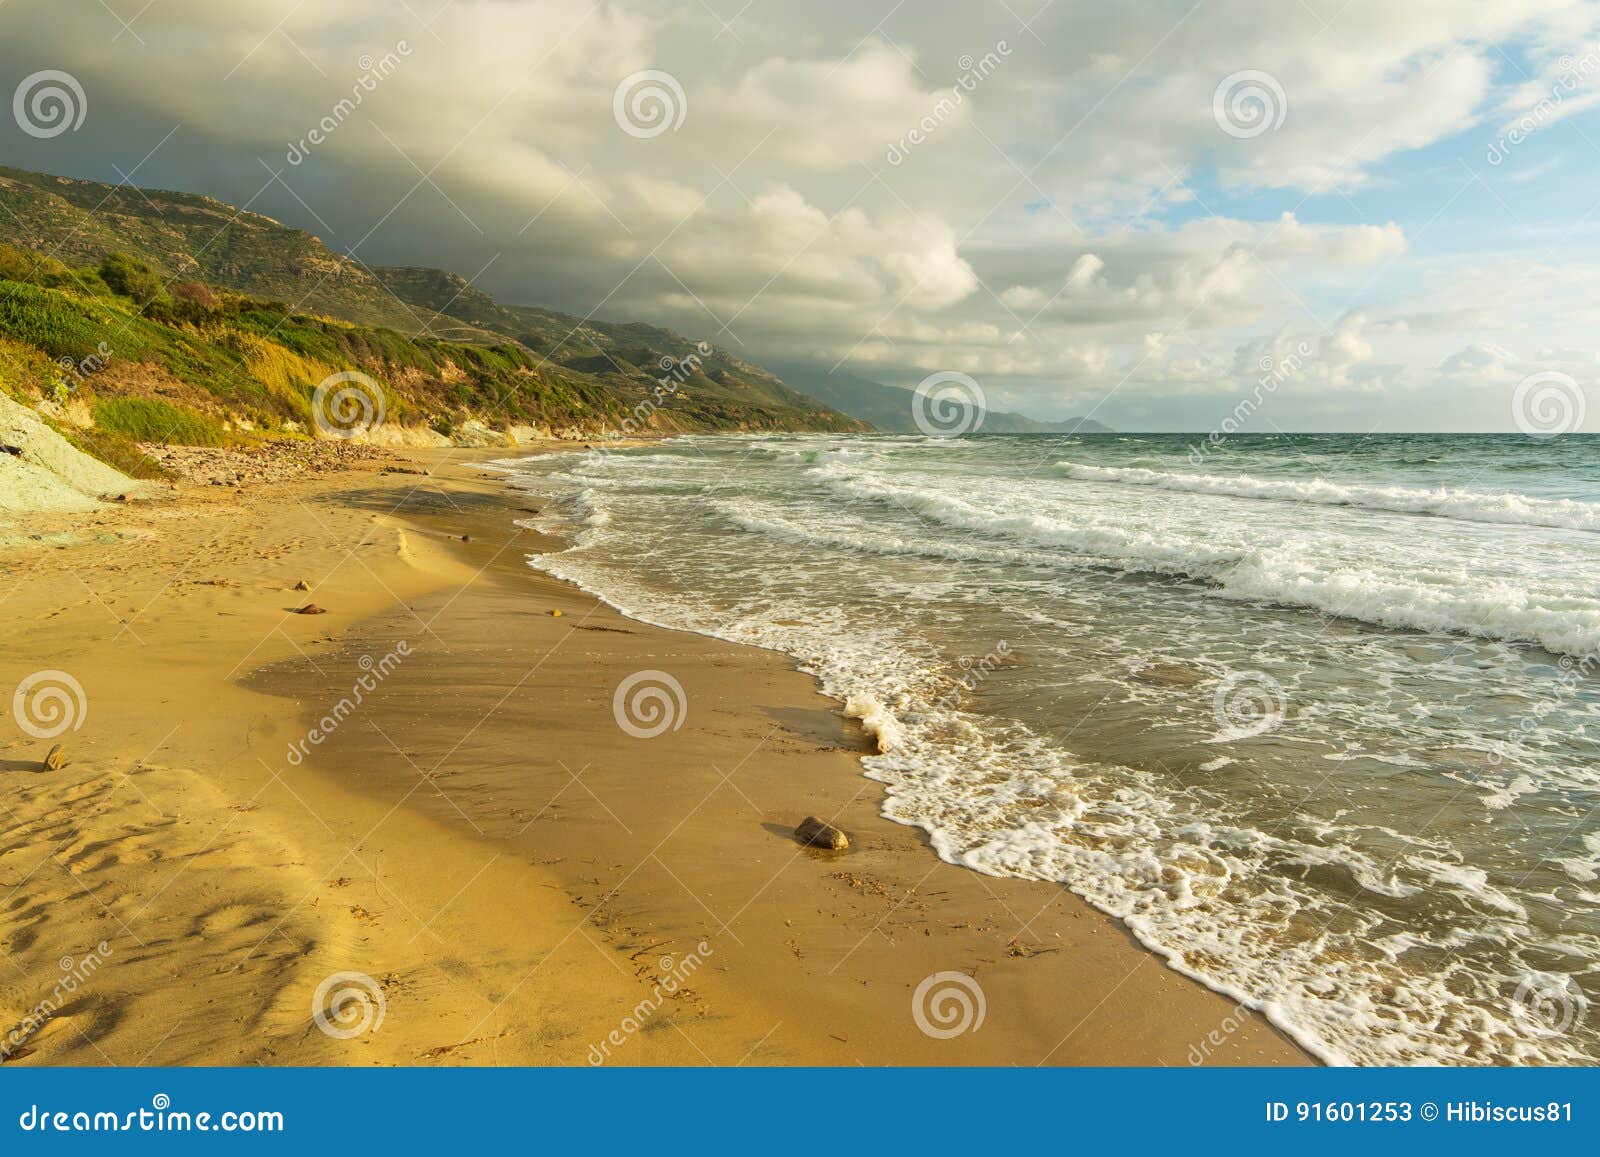 Waves in La Speranza beach stock image. Image of coast - 91601253